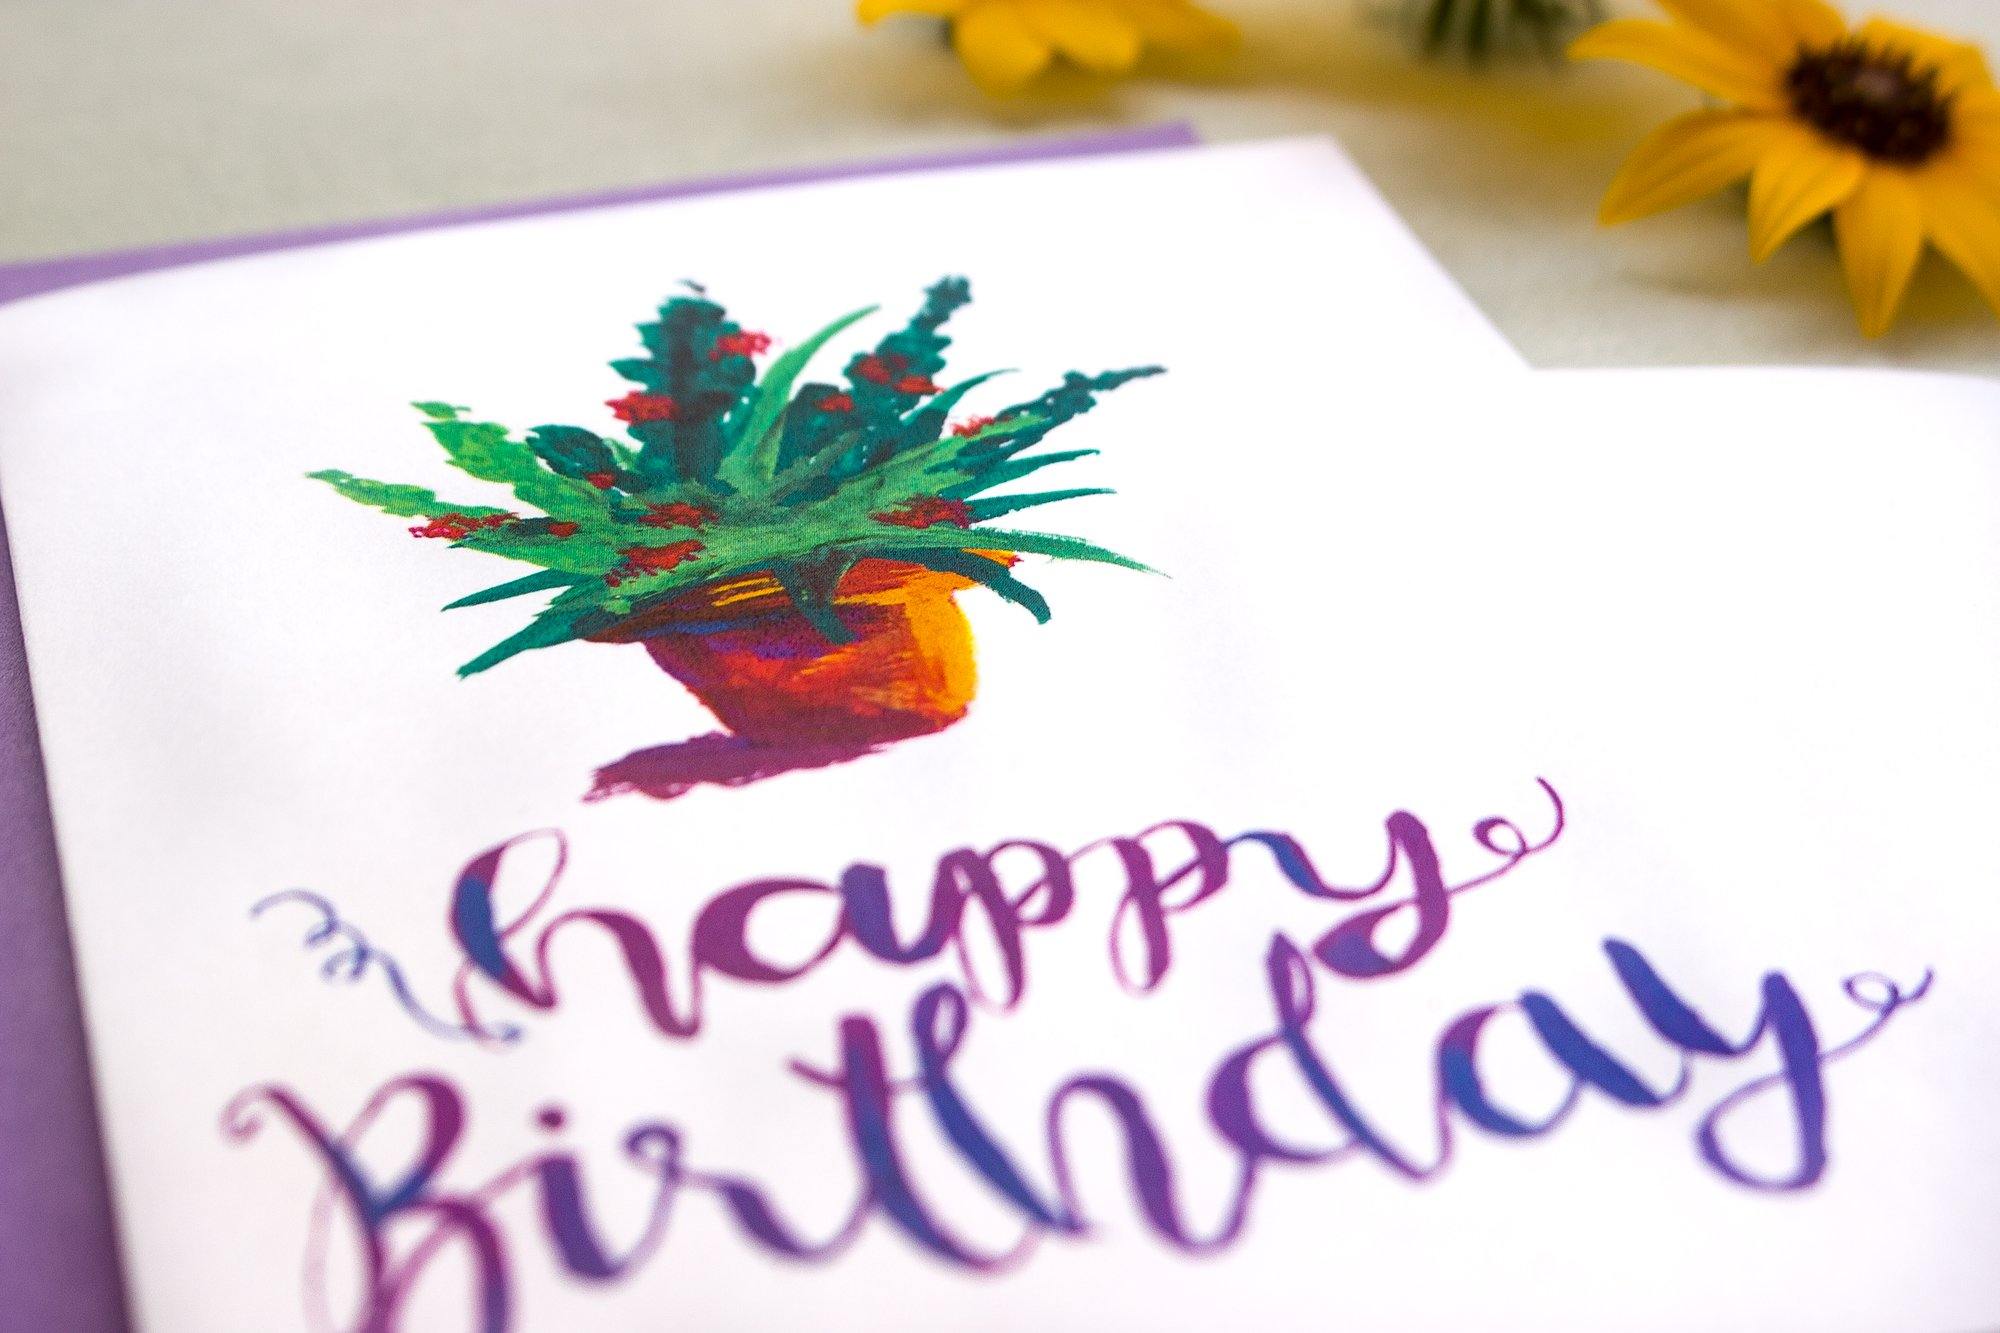 Illustrated Houseplant Birthday Card - Sunshine and Ravioli